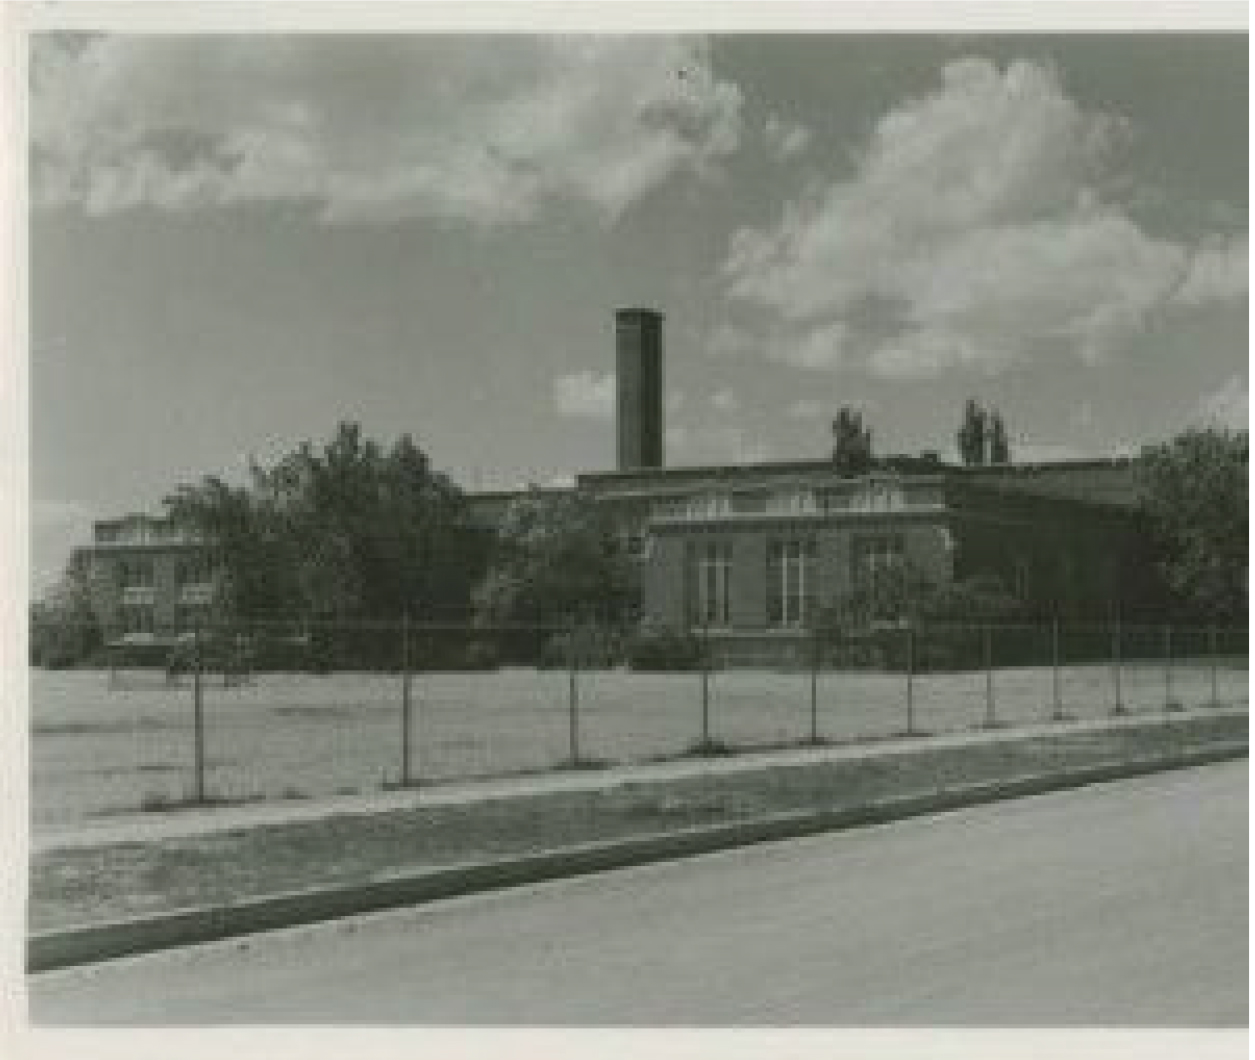 historical photo of Asbury Elementary School